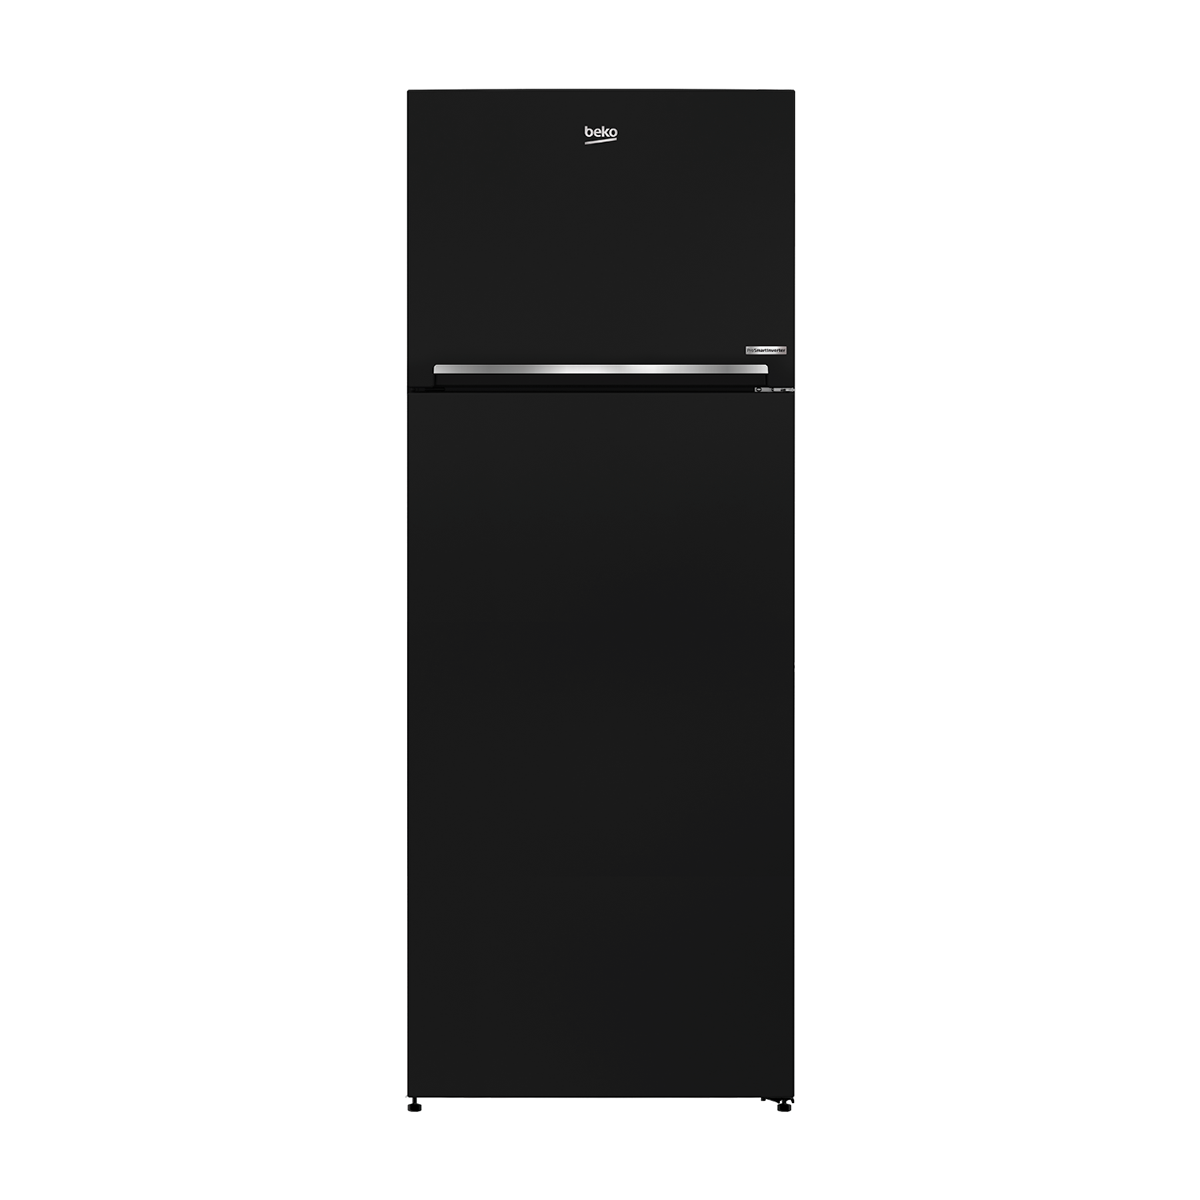 Beko - Refrigerator - 2 Door -448 lt -net 408lt- Black (PVC) - Nofrost + Inverter +Harvest fresh